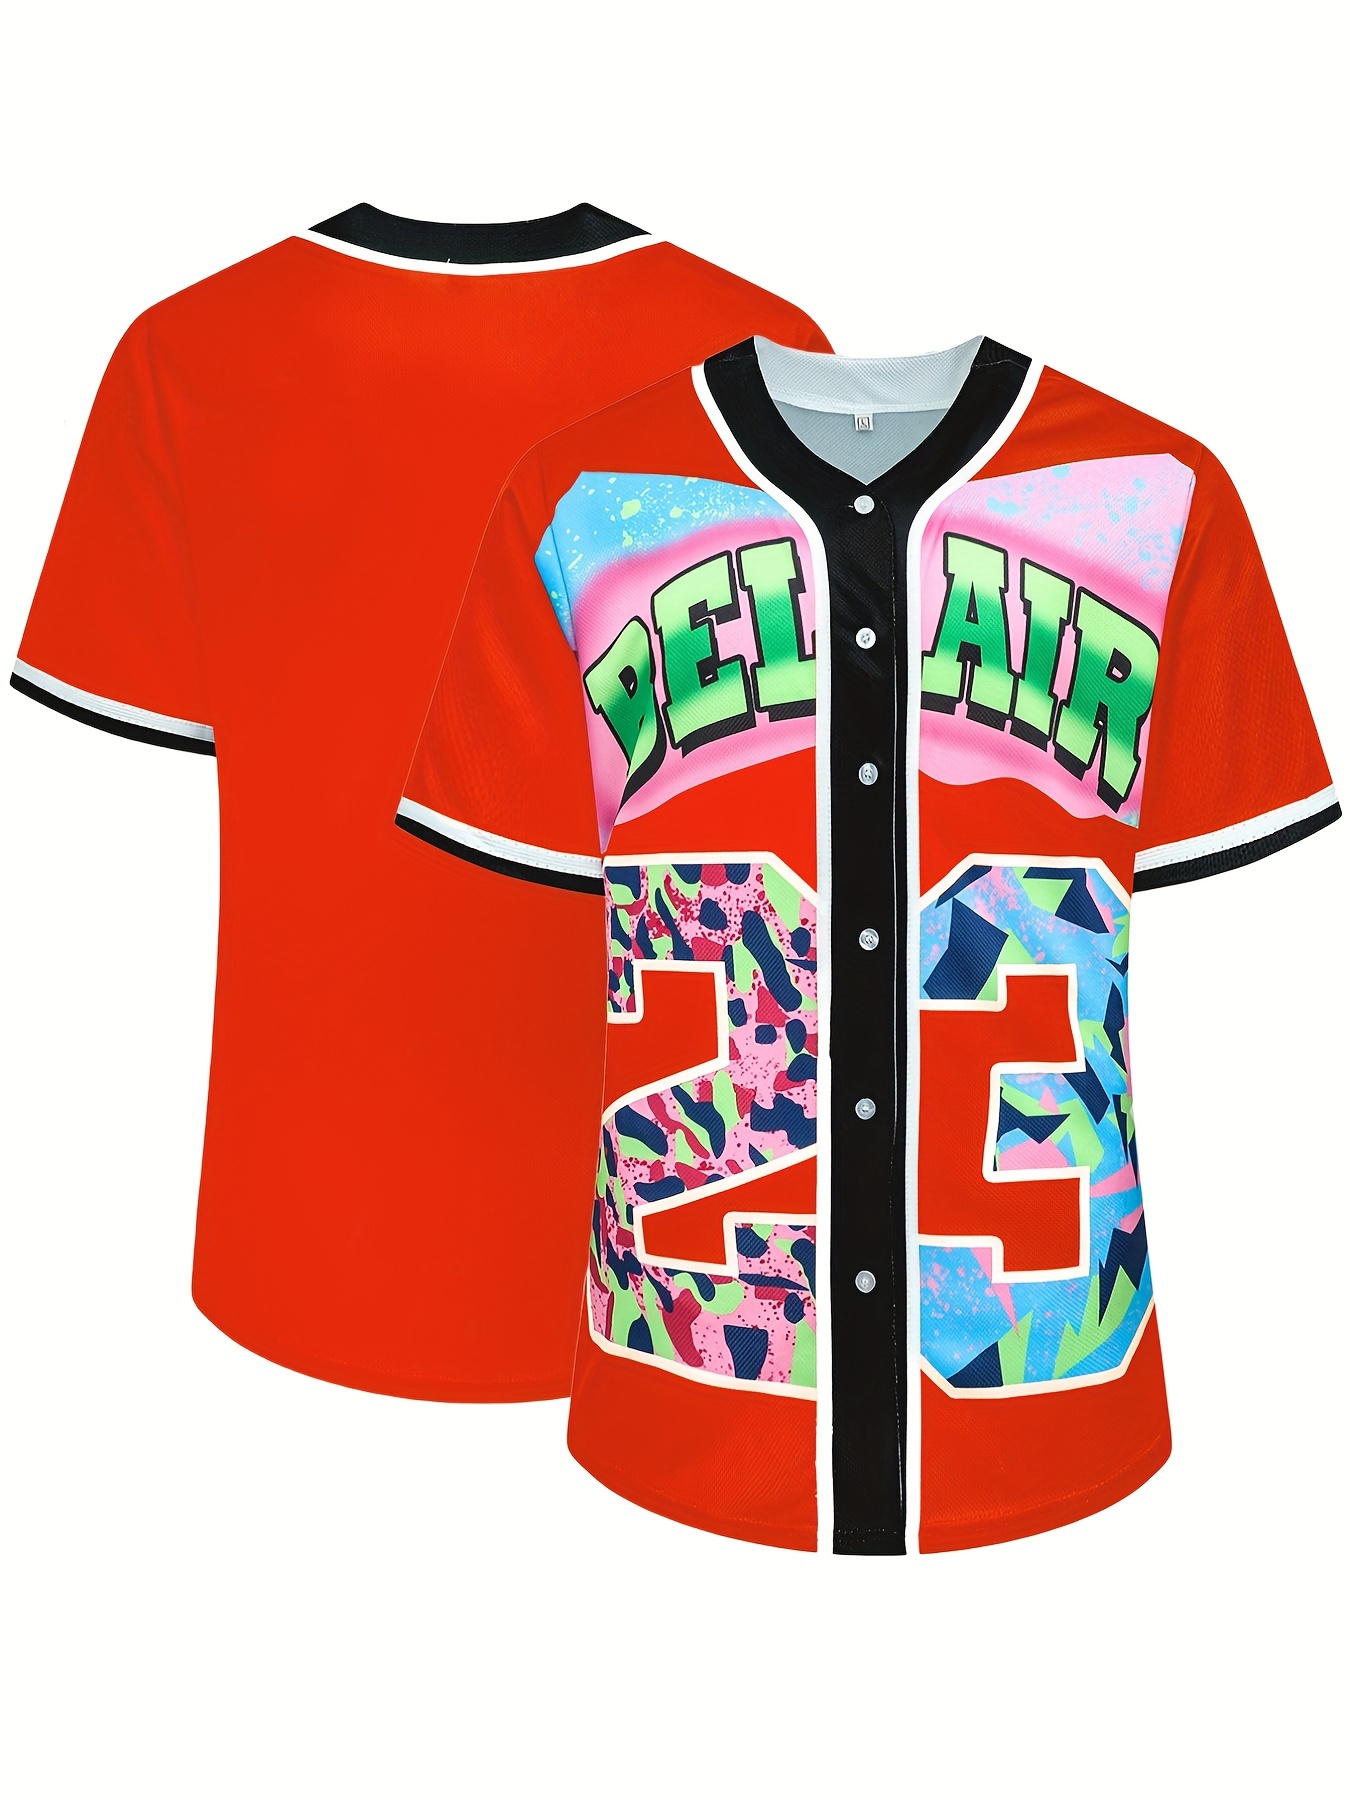 90s Bel Air 23 Printed Baseball Jersey  Baseball jersey outfit, Baseball  jerseys, Jersey outfit